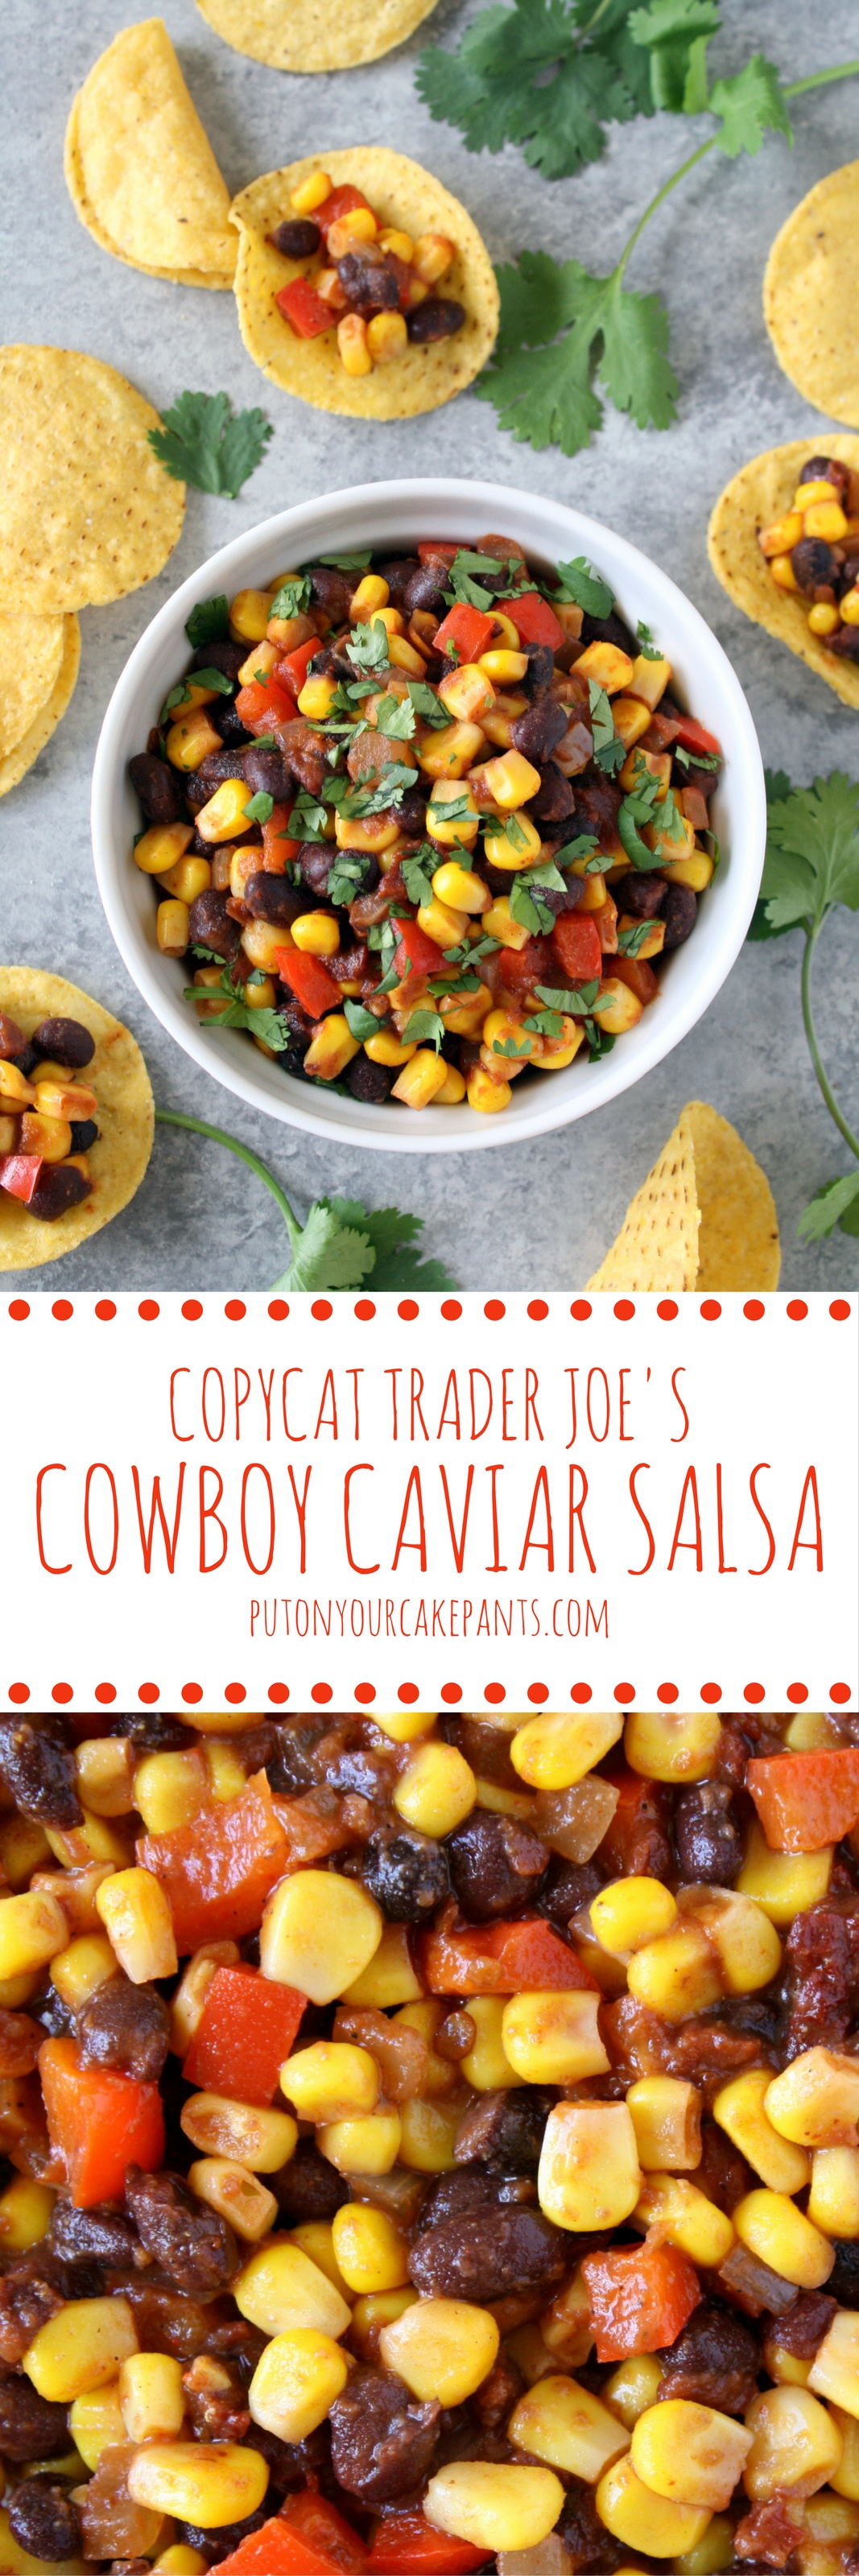 copycat Trader Joe's cowboy caviar salsa